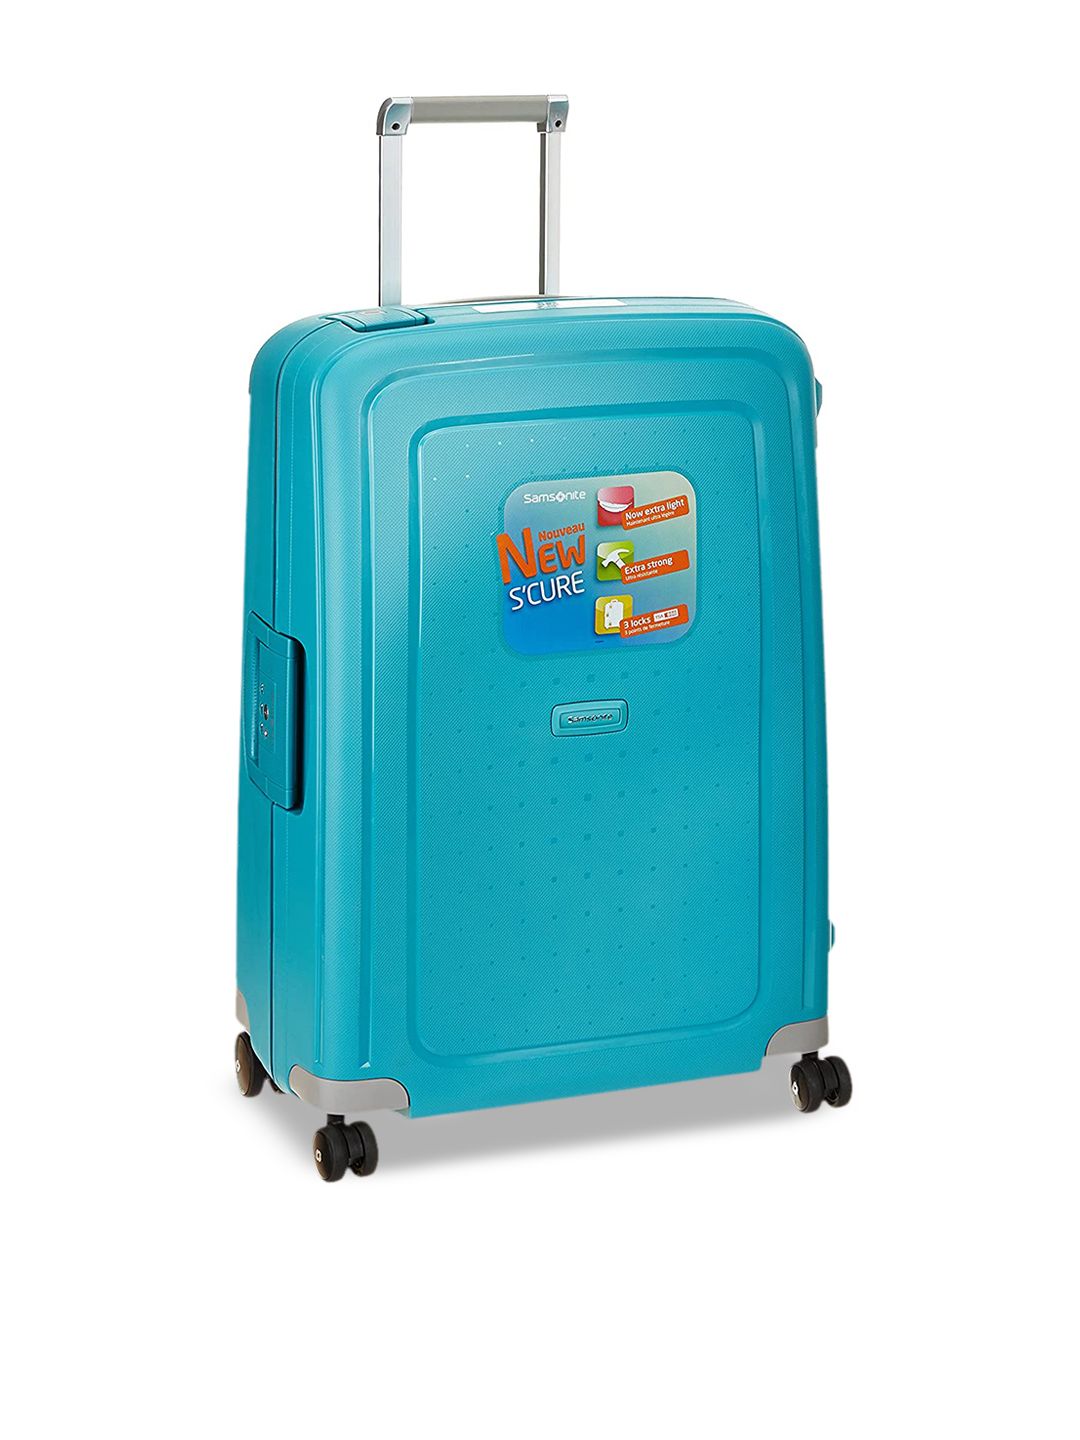 Samsonite Teal Blue Solid Hard Large Trolley Suitcase Price in India